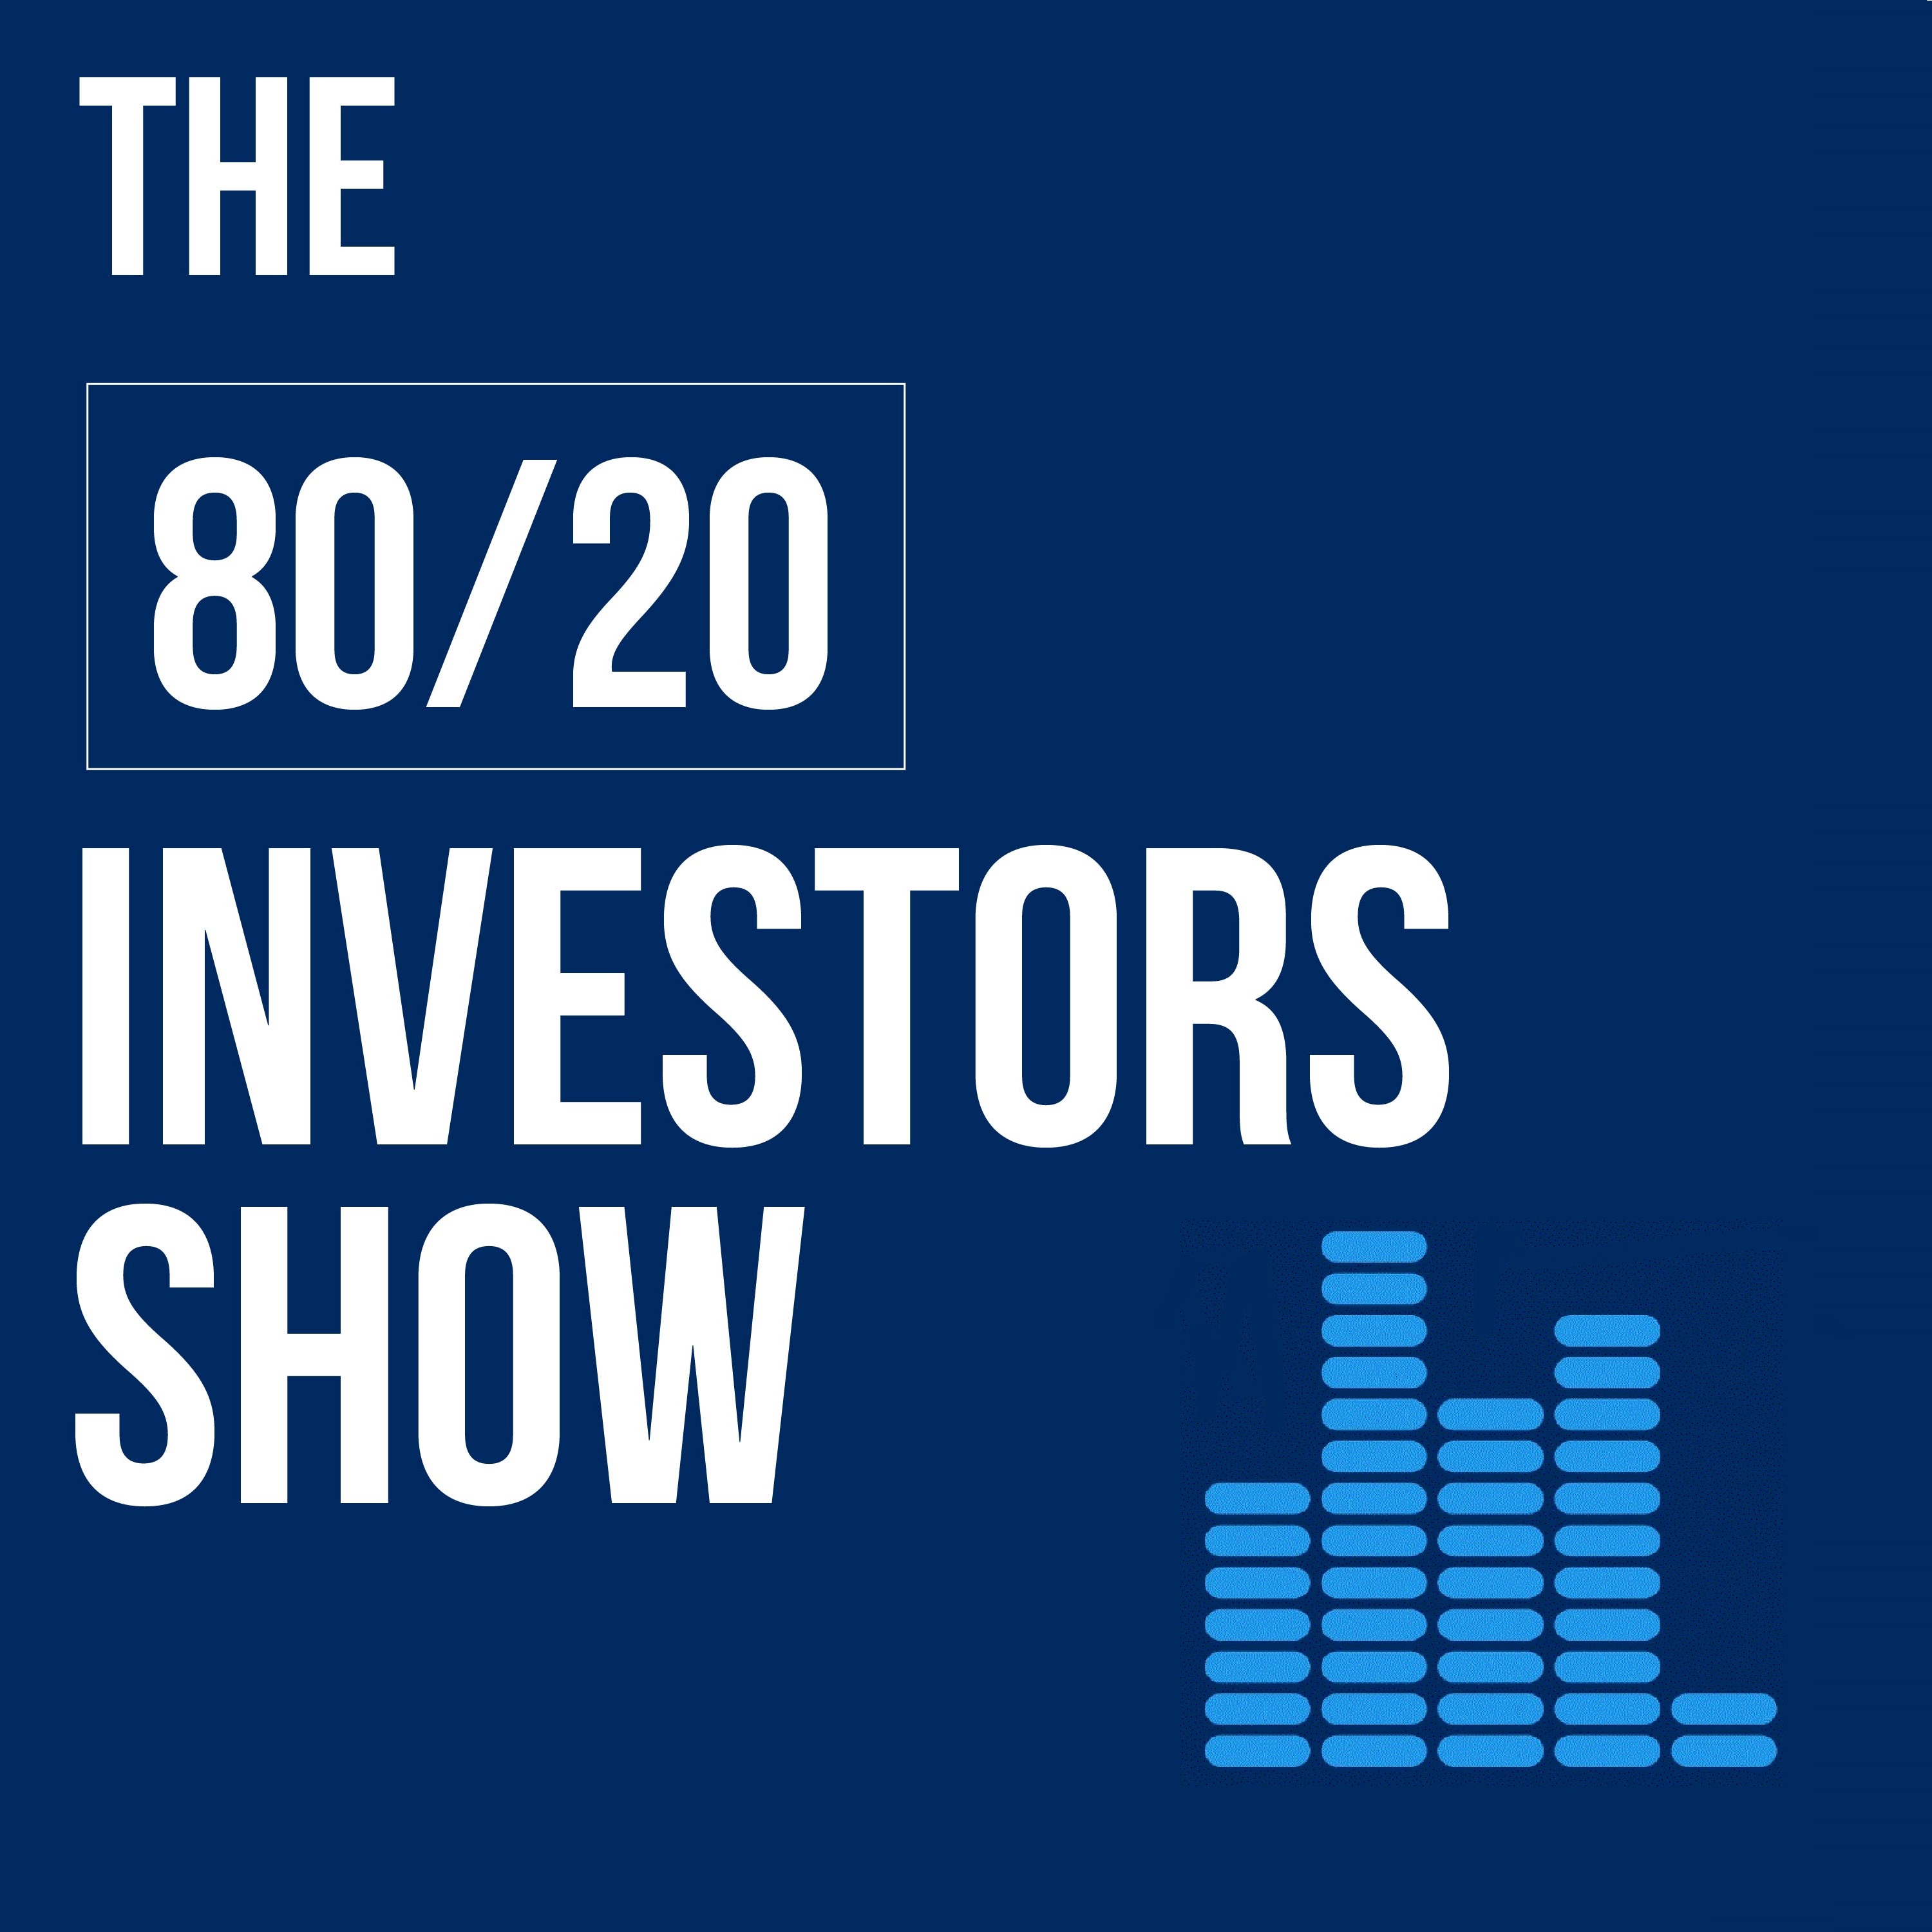 The 80/20 Investors Show